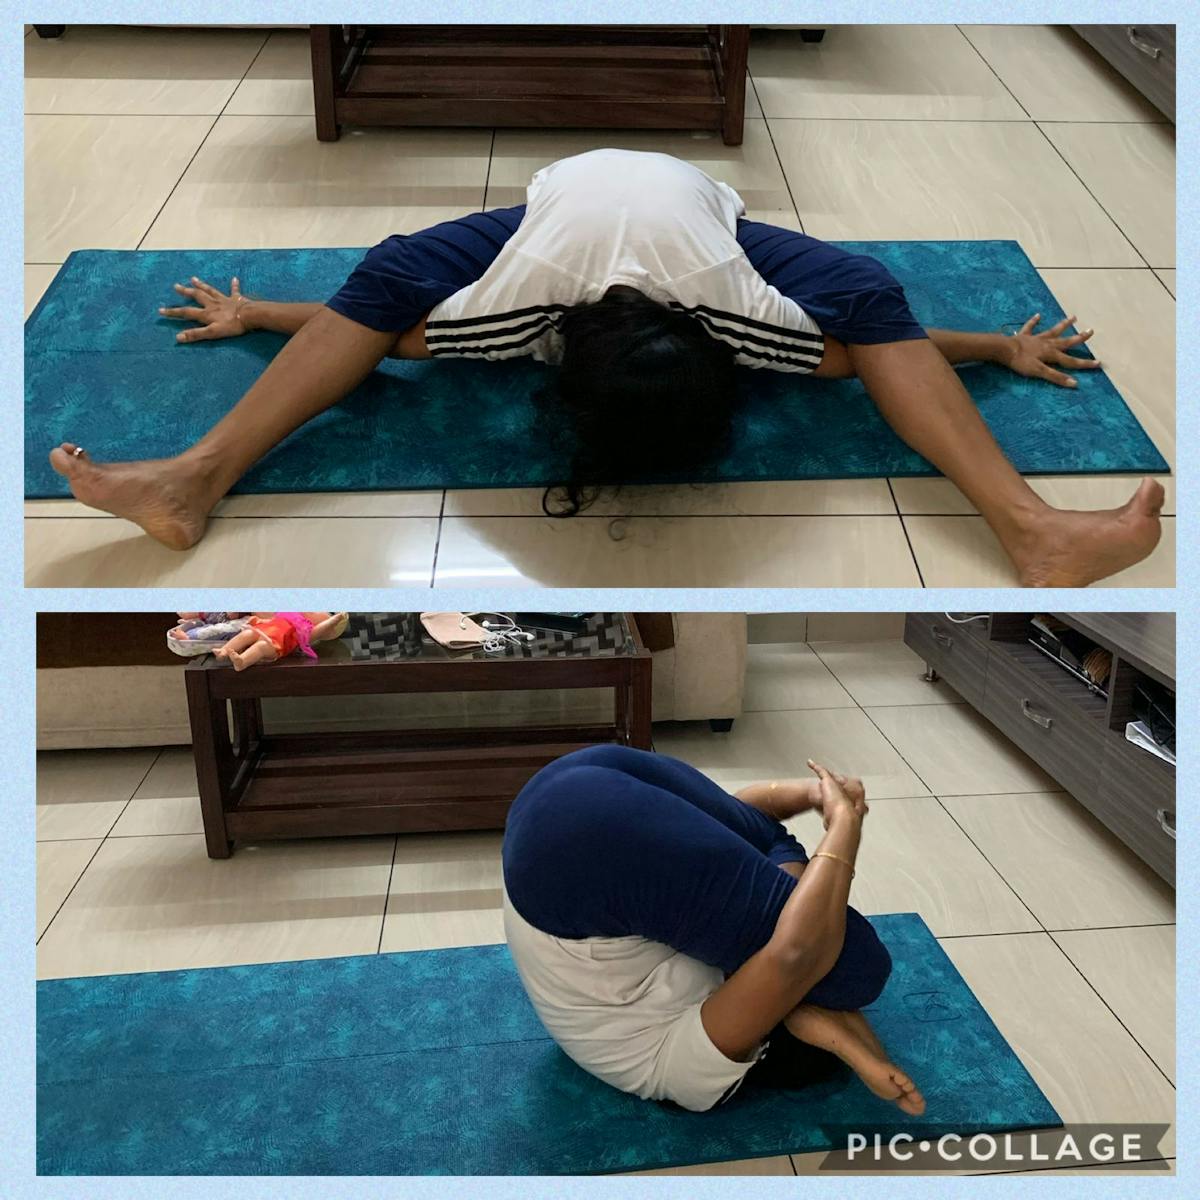 Nandini doing yoga at her house